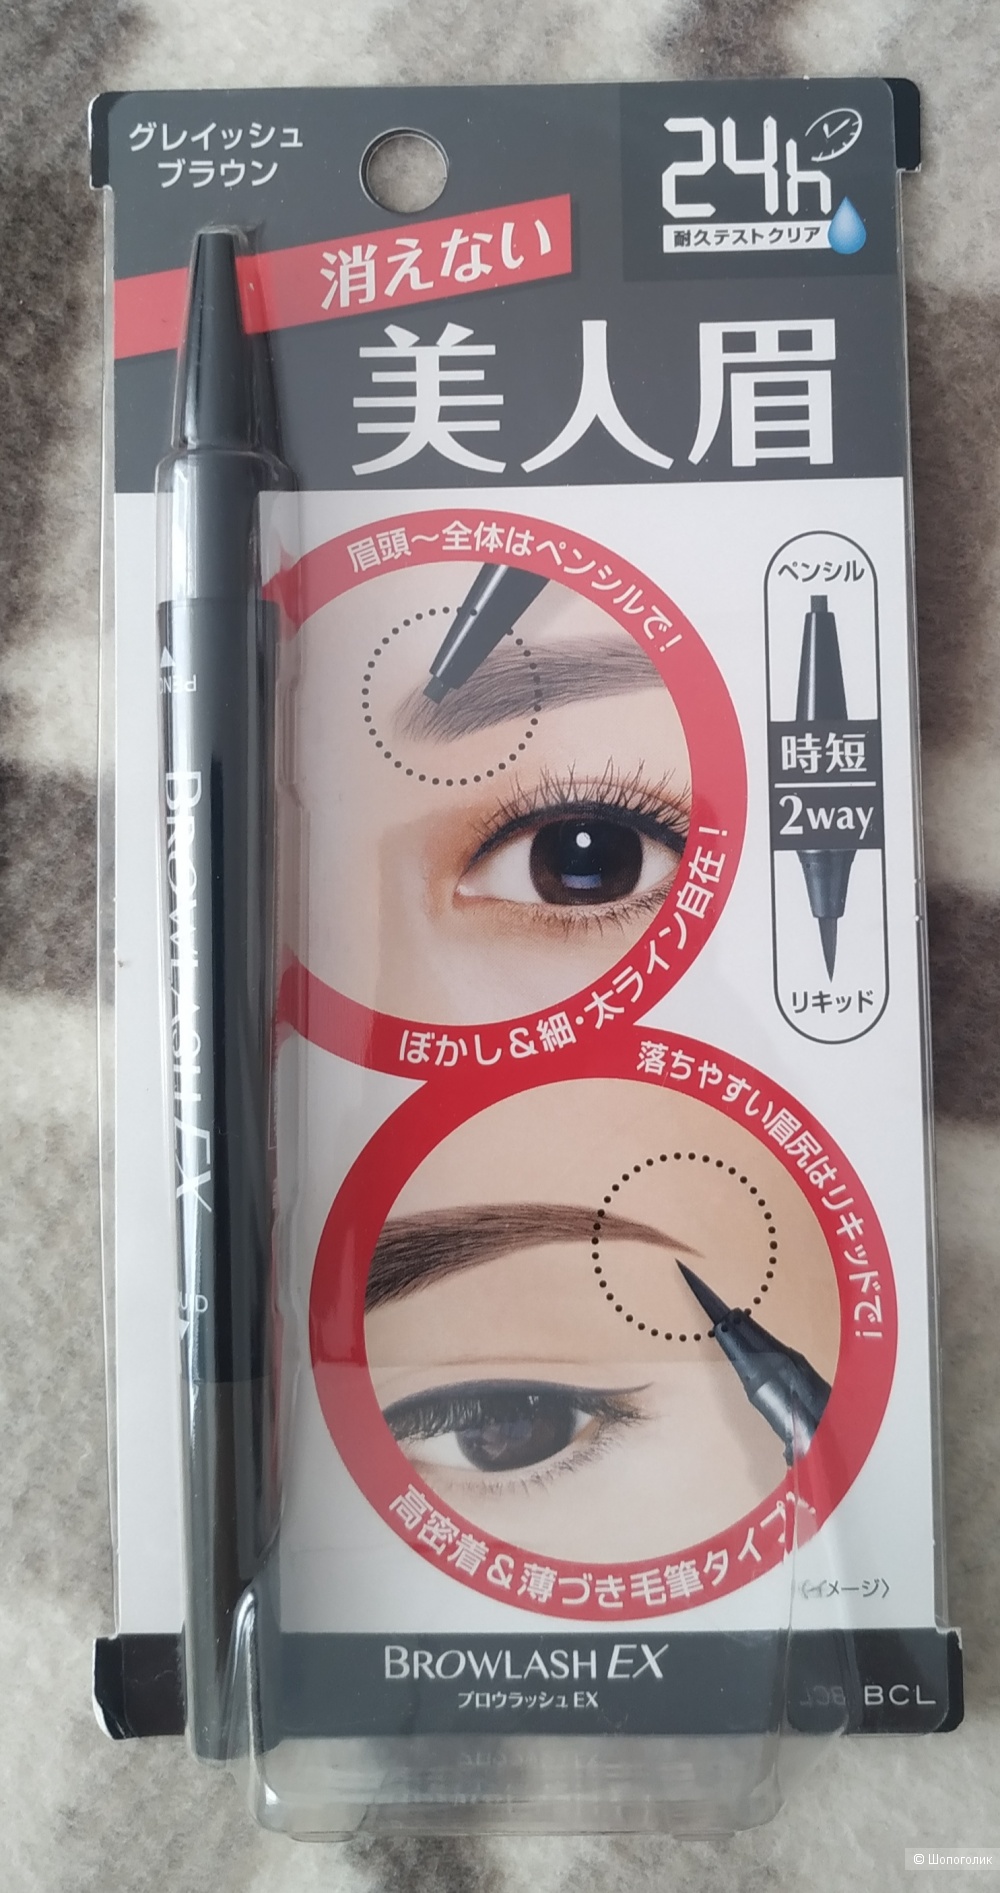 Набор косметики для глаз от BCL (Япония)